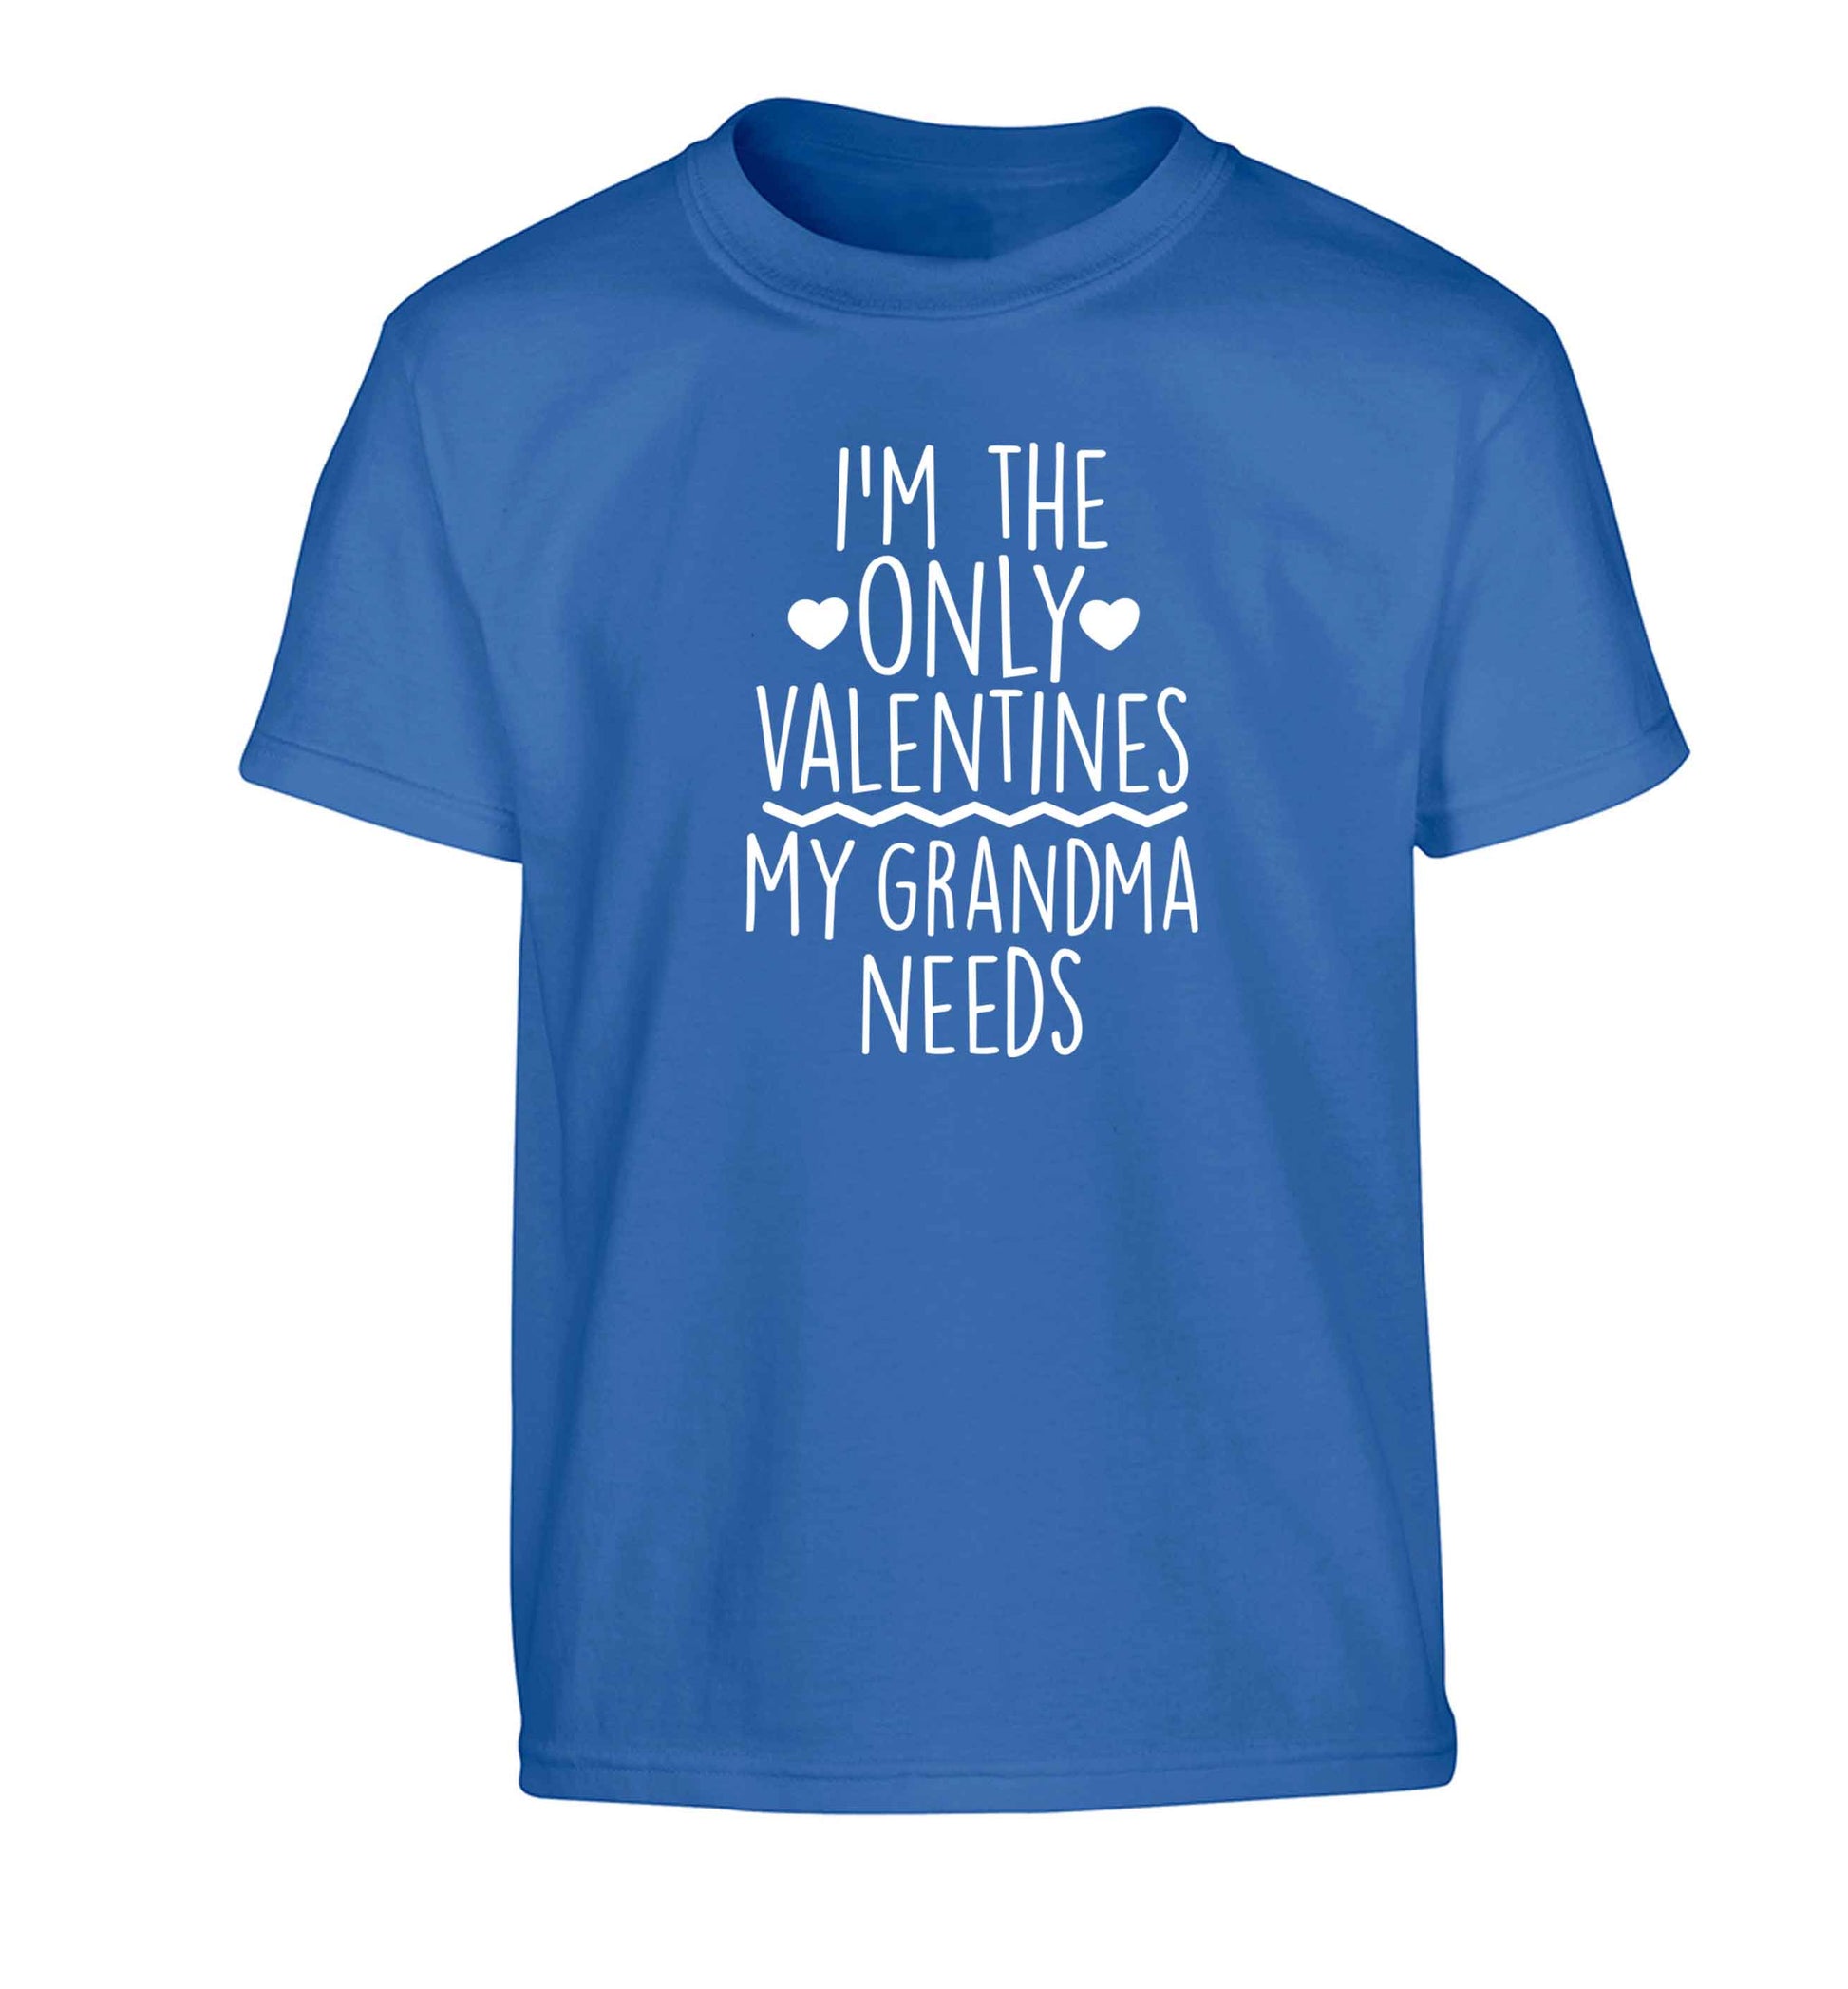 I'm the only valentines my grandma needs Children's blue Tshirt 12-13 Years